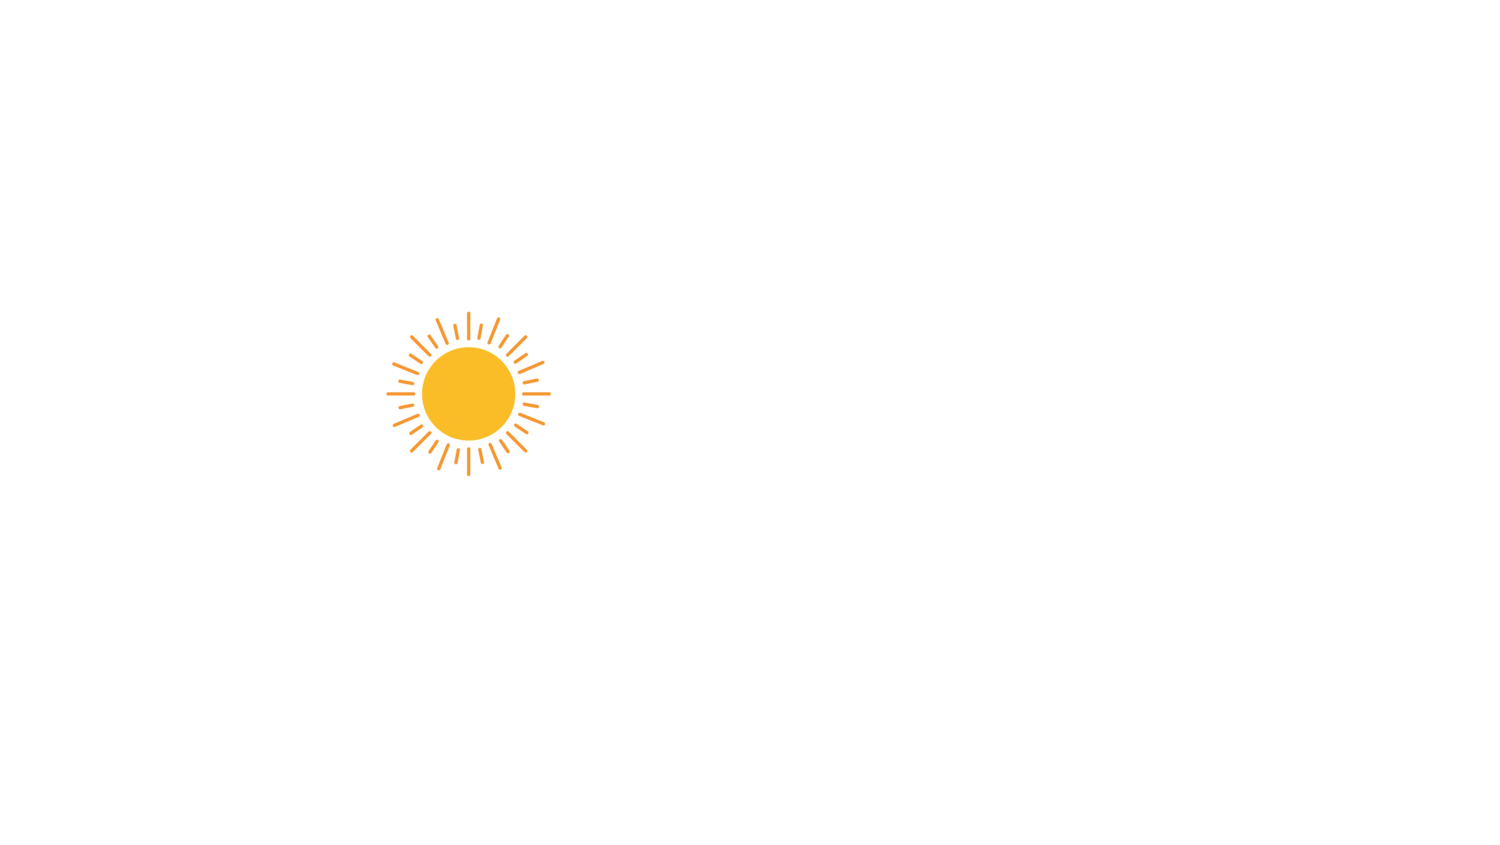 LUX SOLARIS REALTY